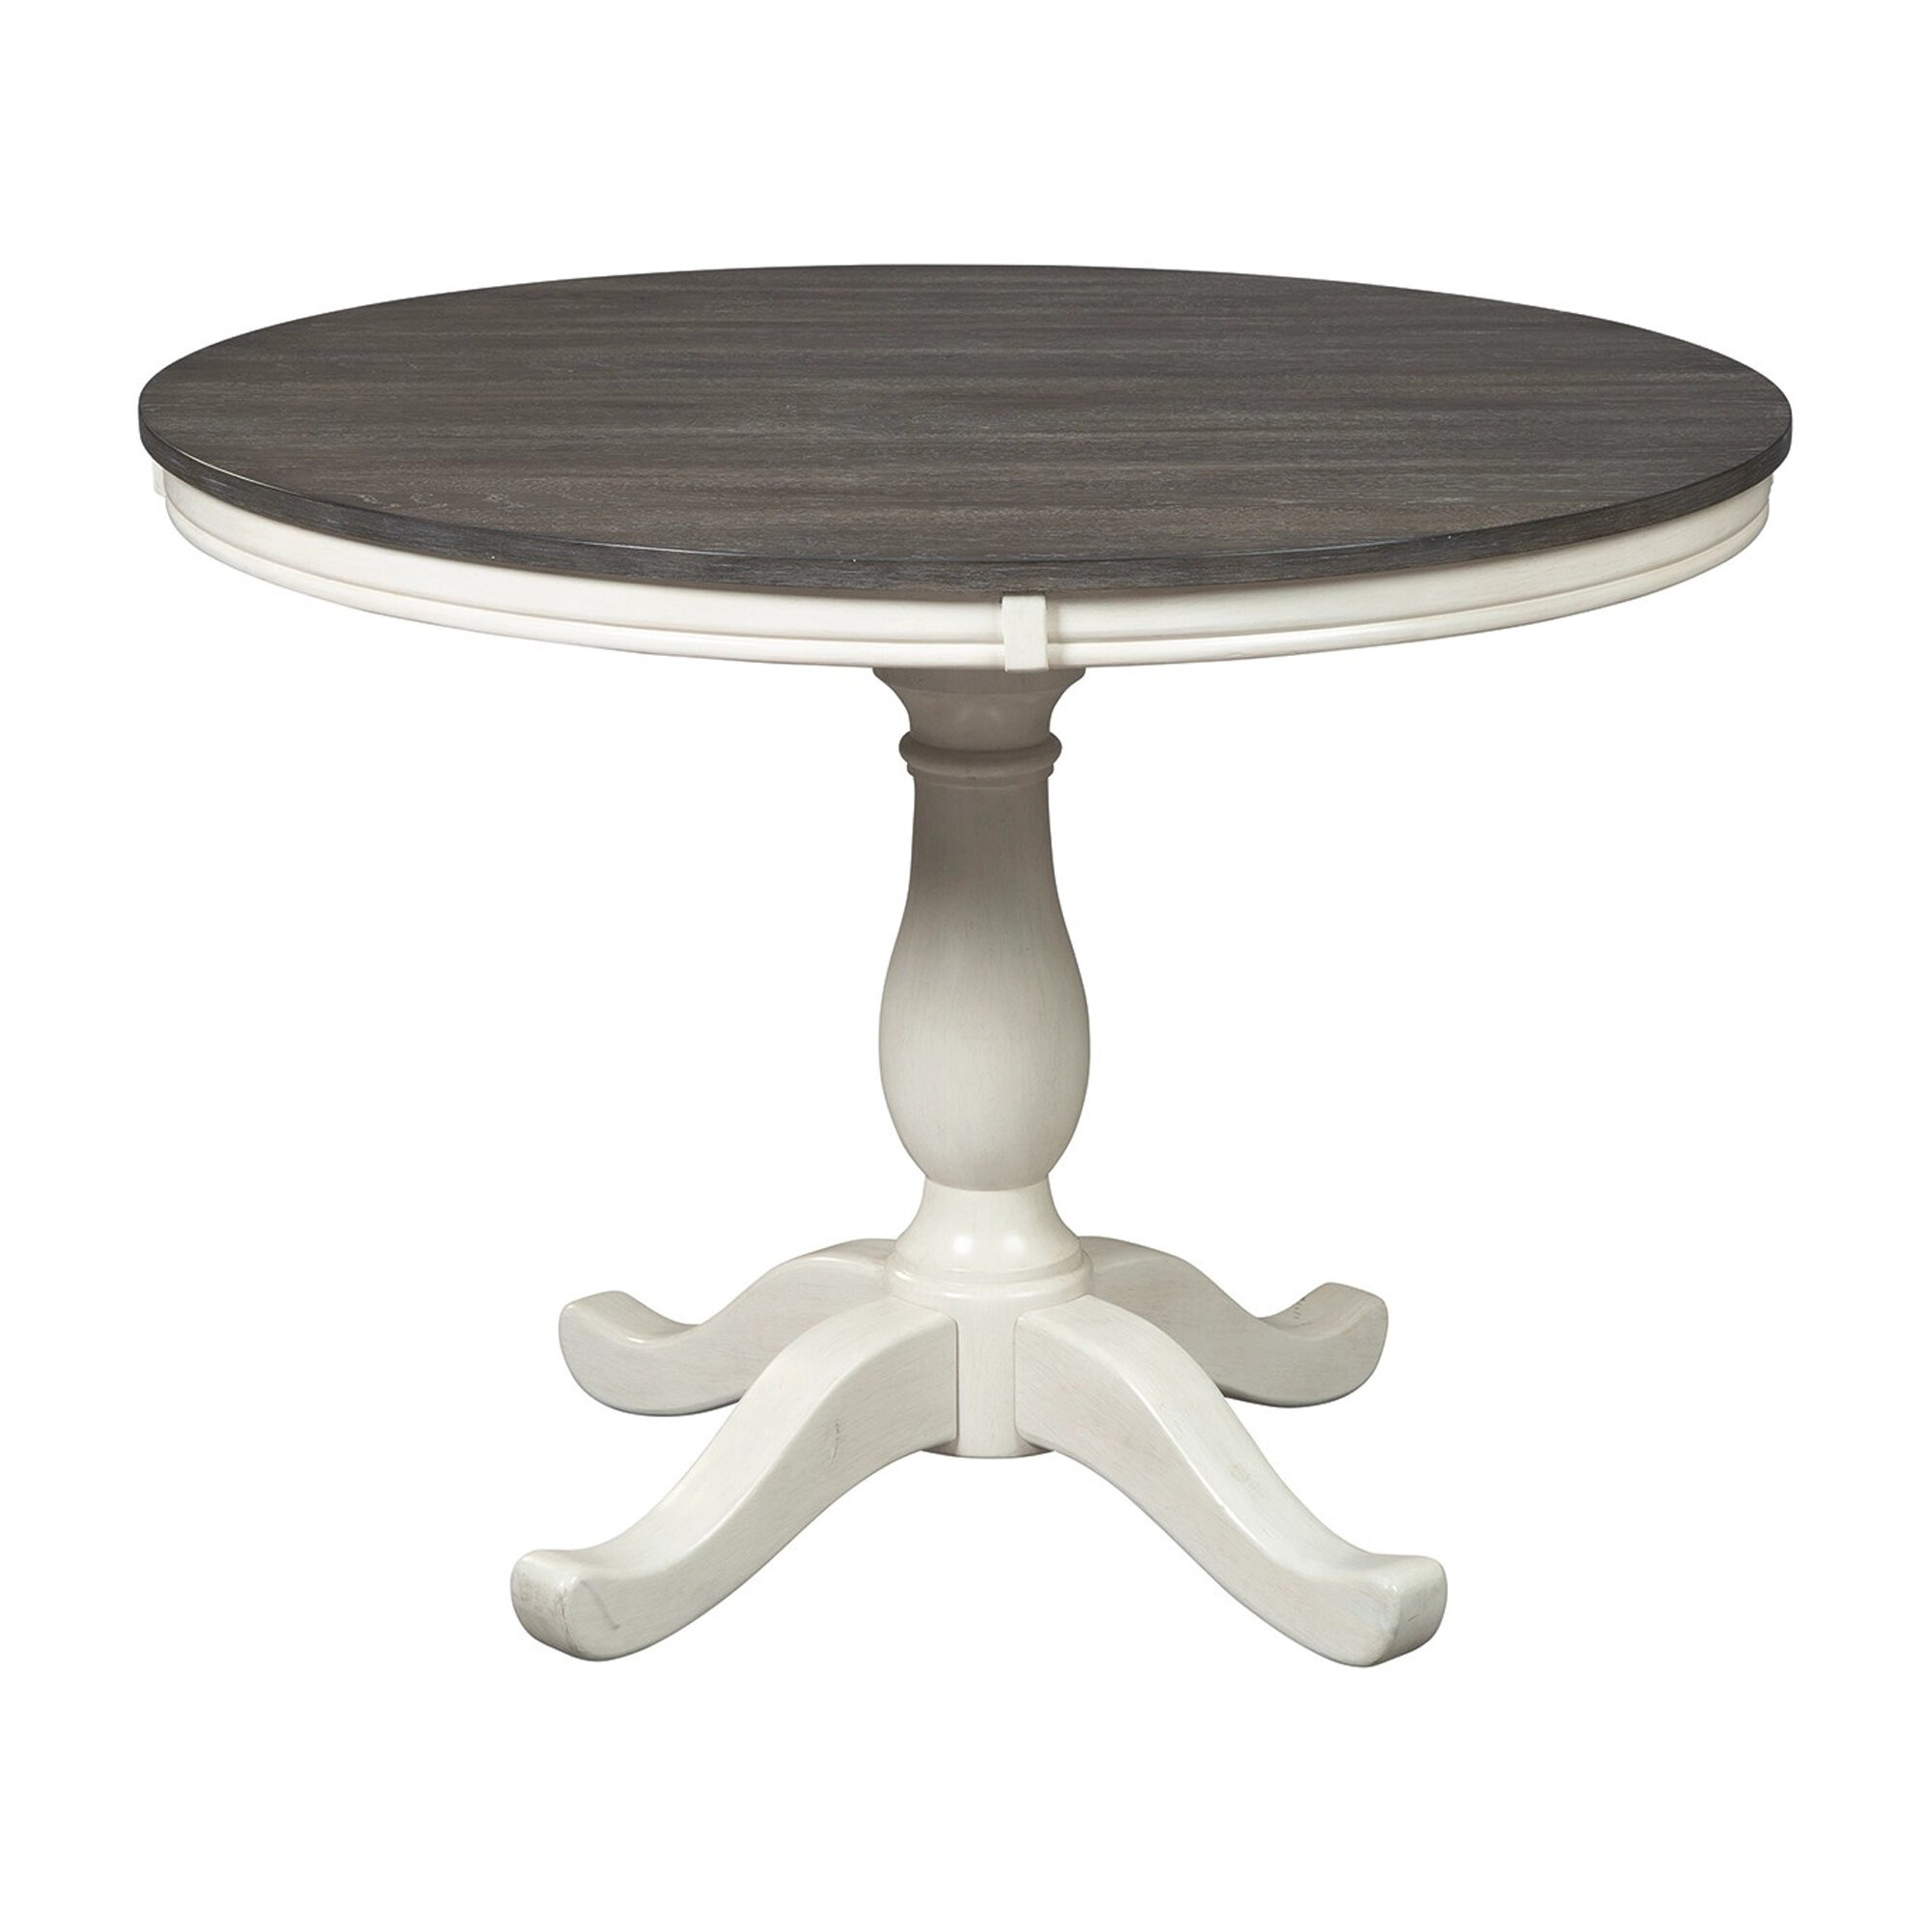 August Grove Mazzolino 3075 Pedestal Dining Table Wayfair